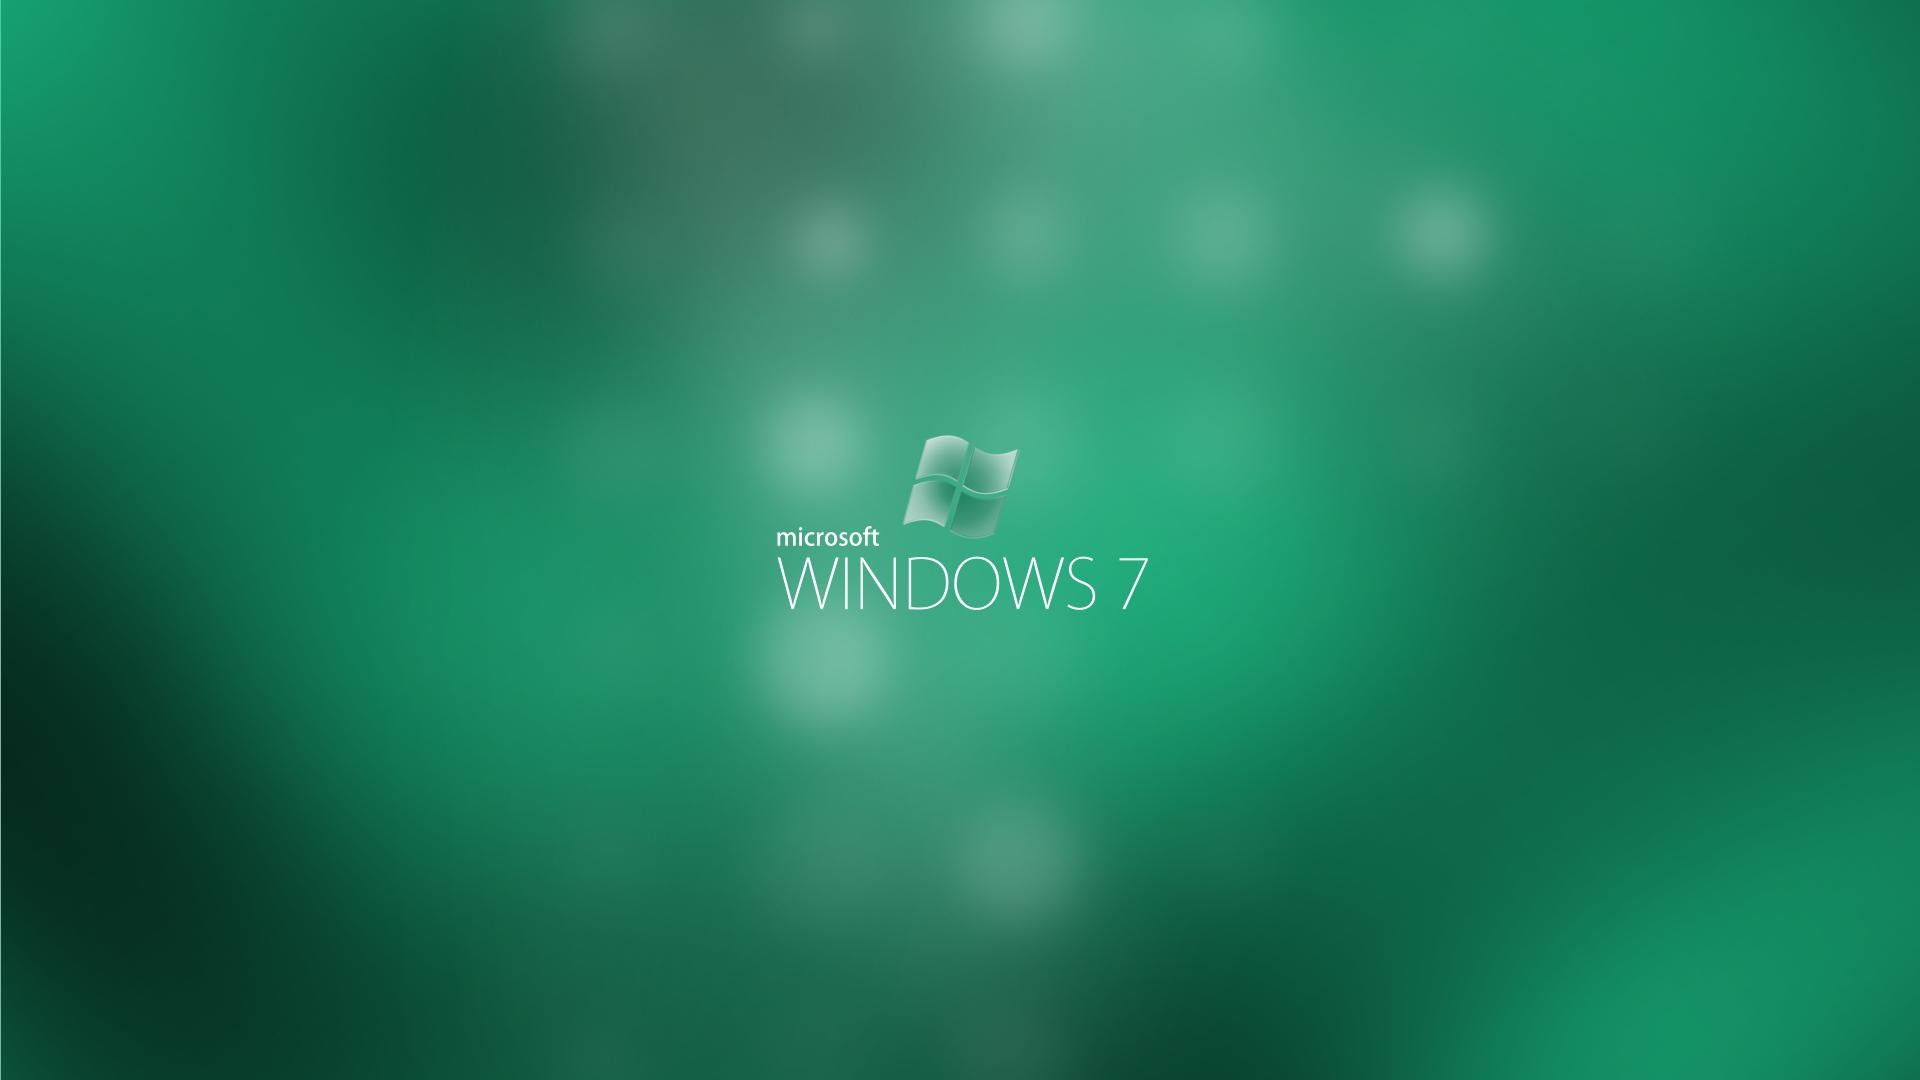 1920x1080  Microsoft Windows 7 green backgrounds wide wallpapers:1280x800,1440x900,1680x1050  - hd